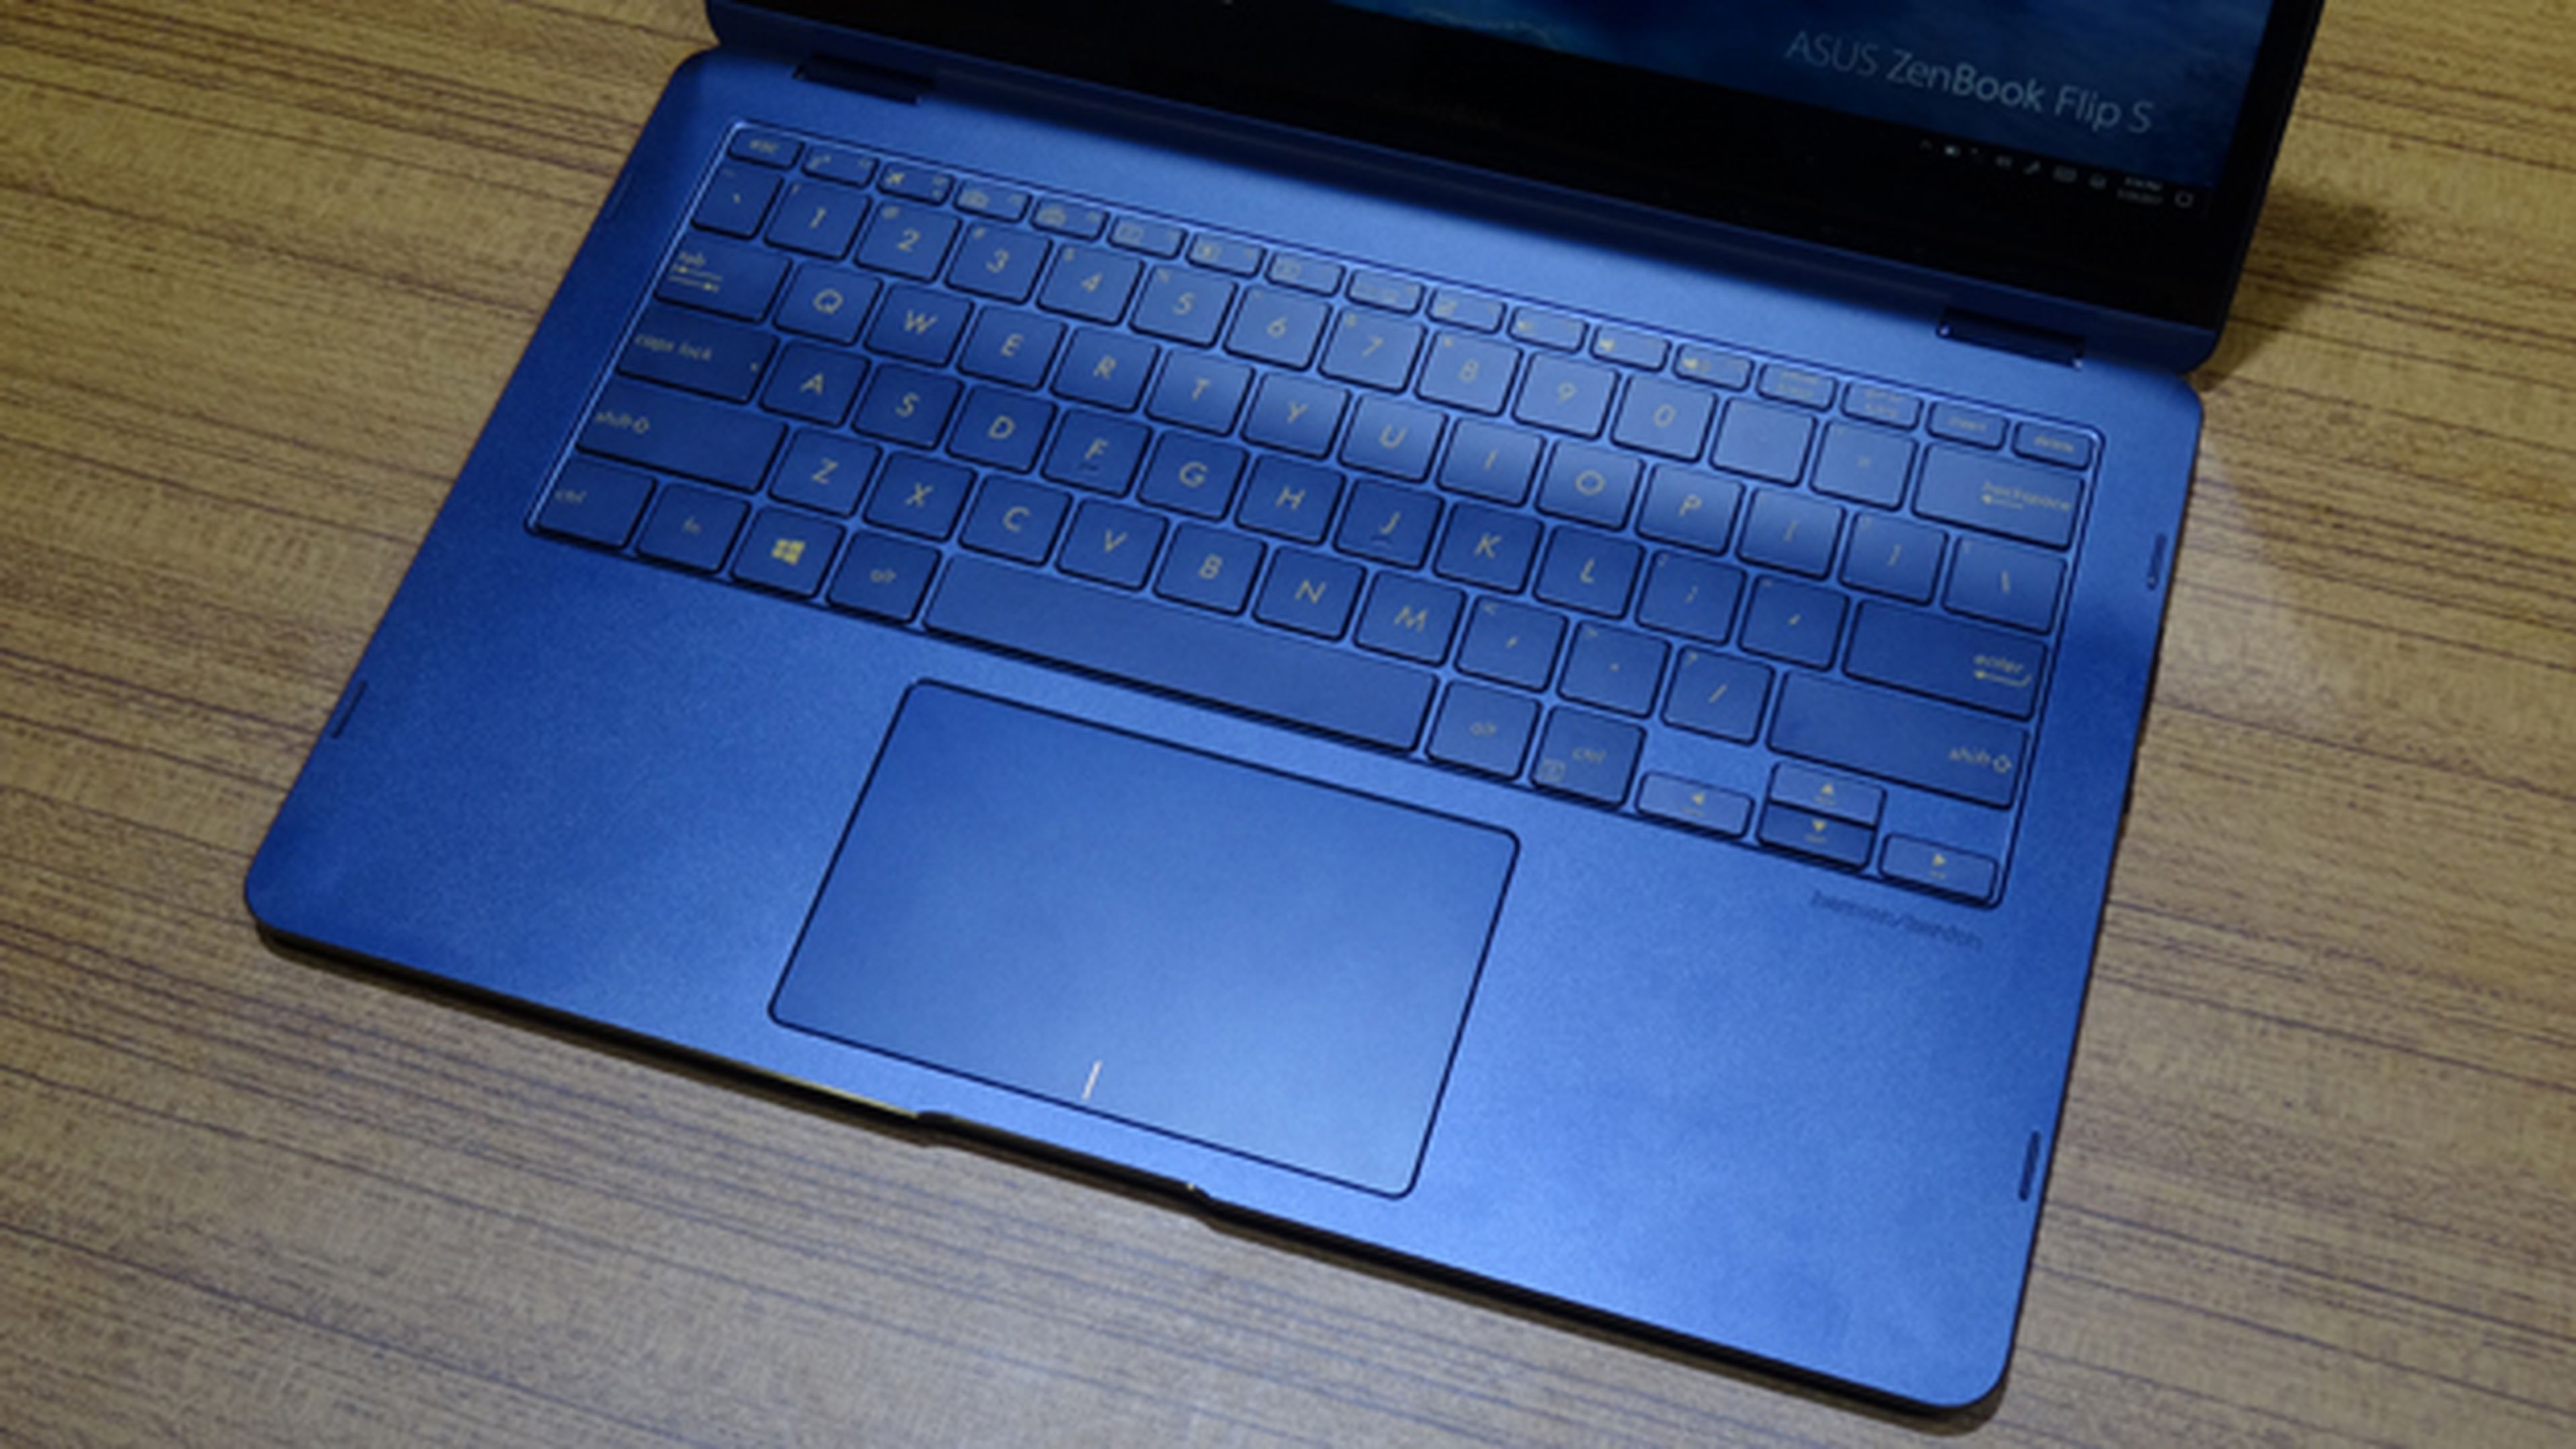 El teclado del ZenBook Flip 3